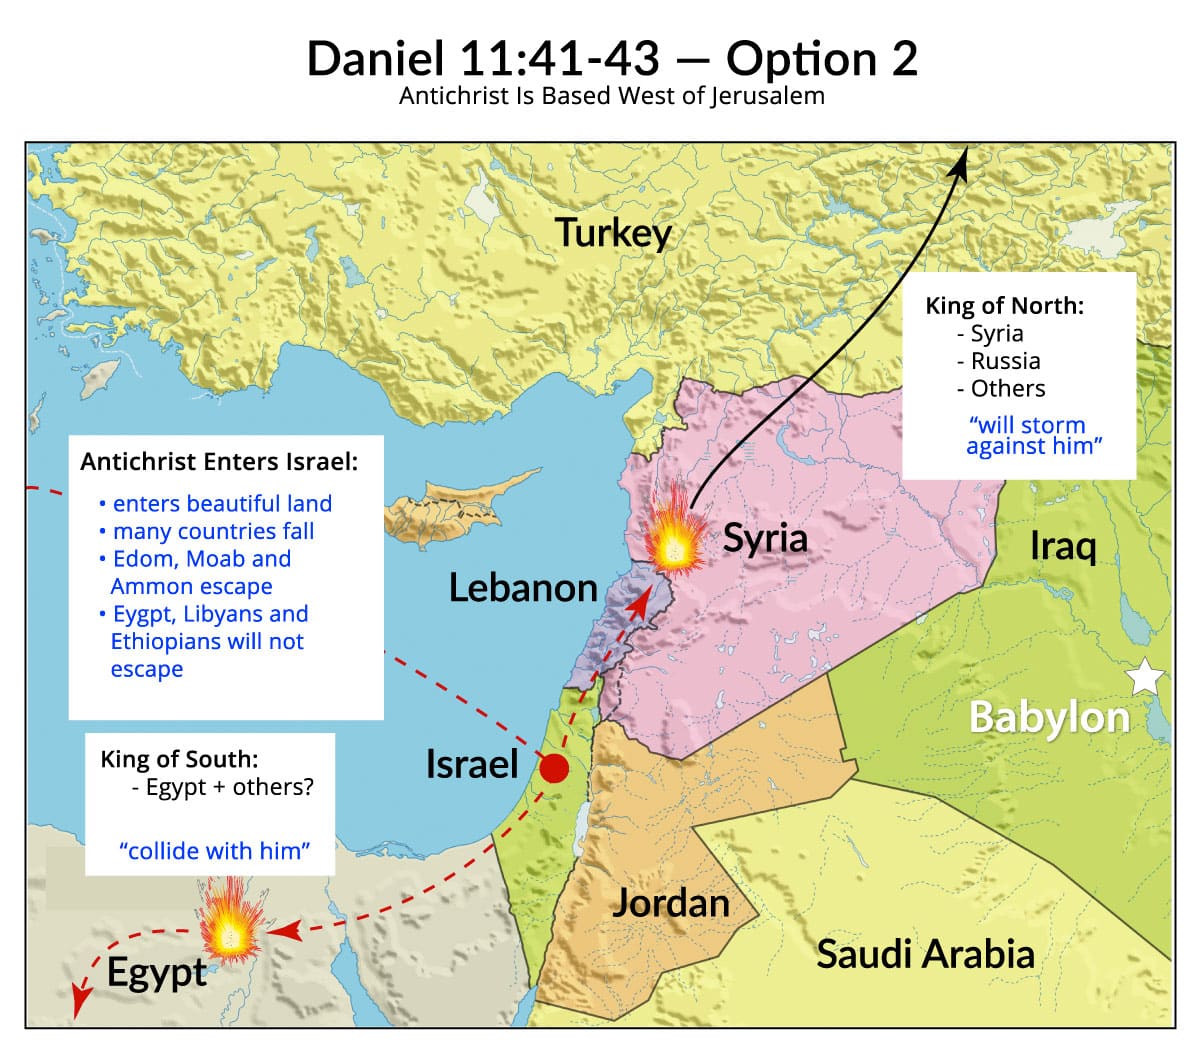 Daniel 11:41-43 — Option 2